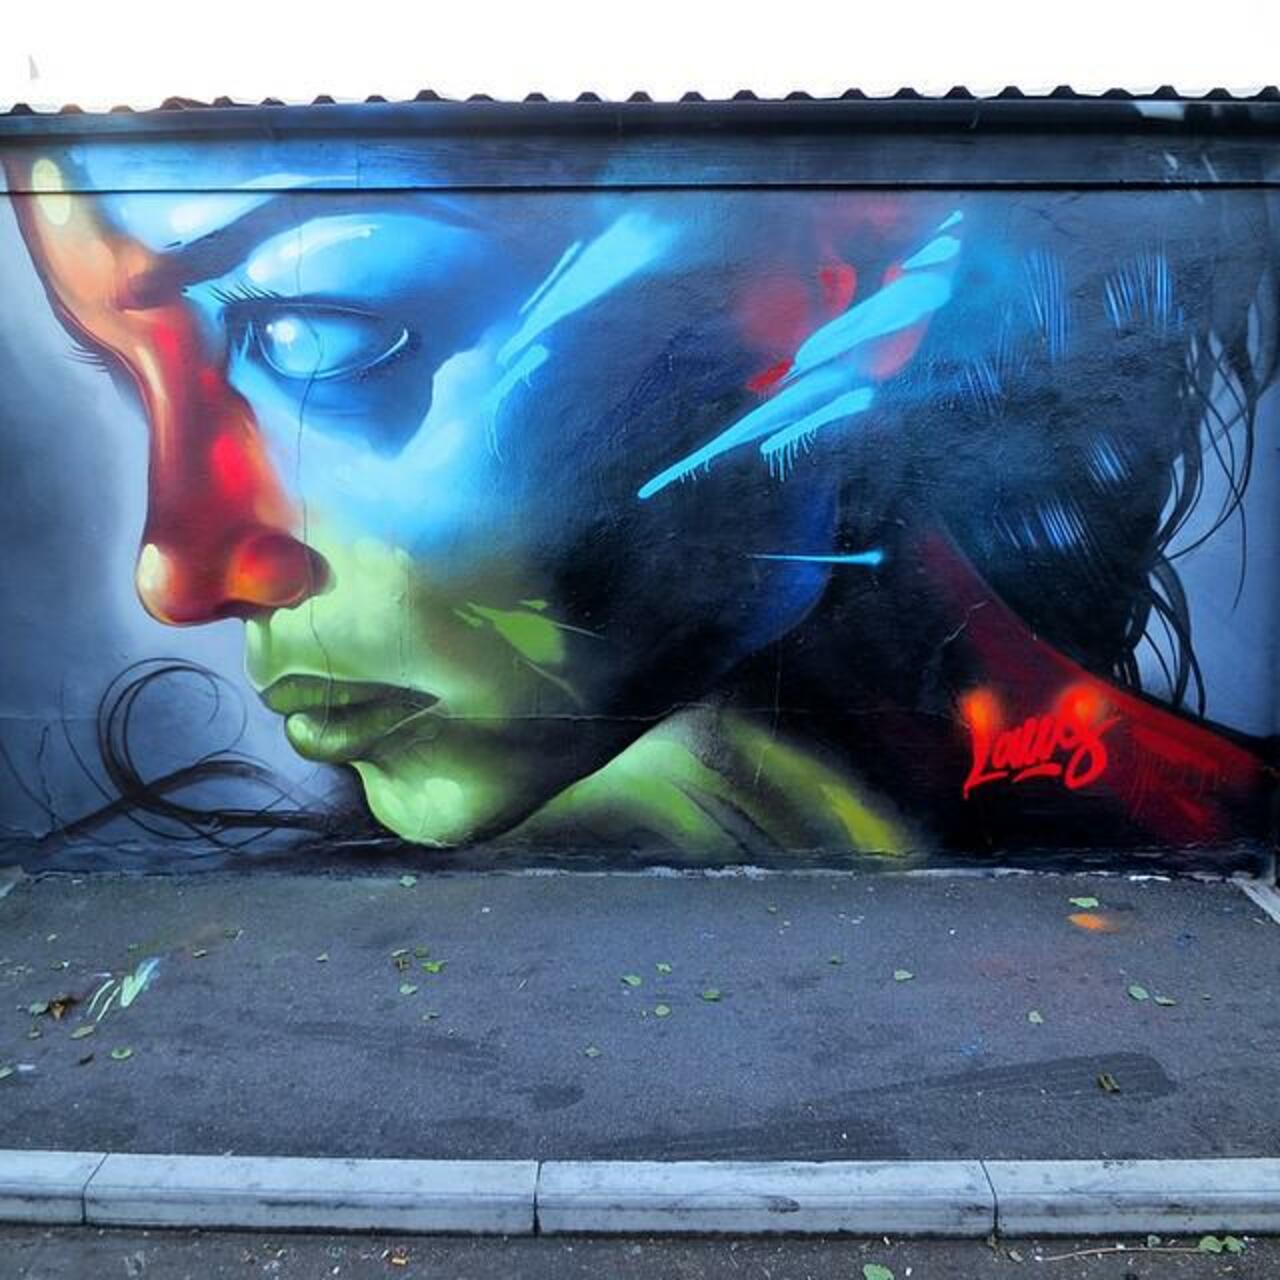 RT @Bastet_11: #amazing #urbanart by @Rmerism #FourElms #cardiff #UK #streetart #graffiti #murals https://www.facebook.com/rmerism?fref=ts http://t.co/peroSkqLDY